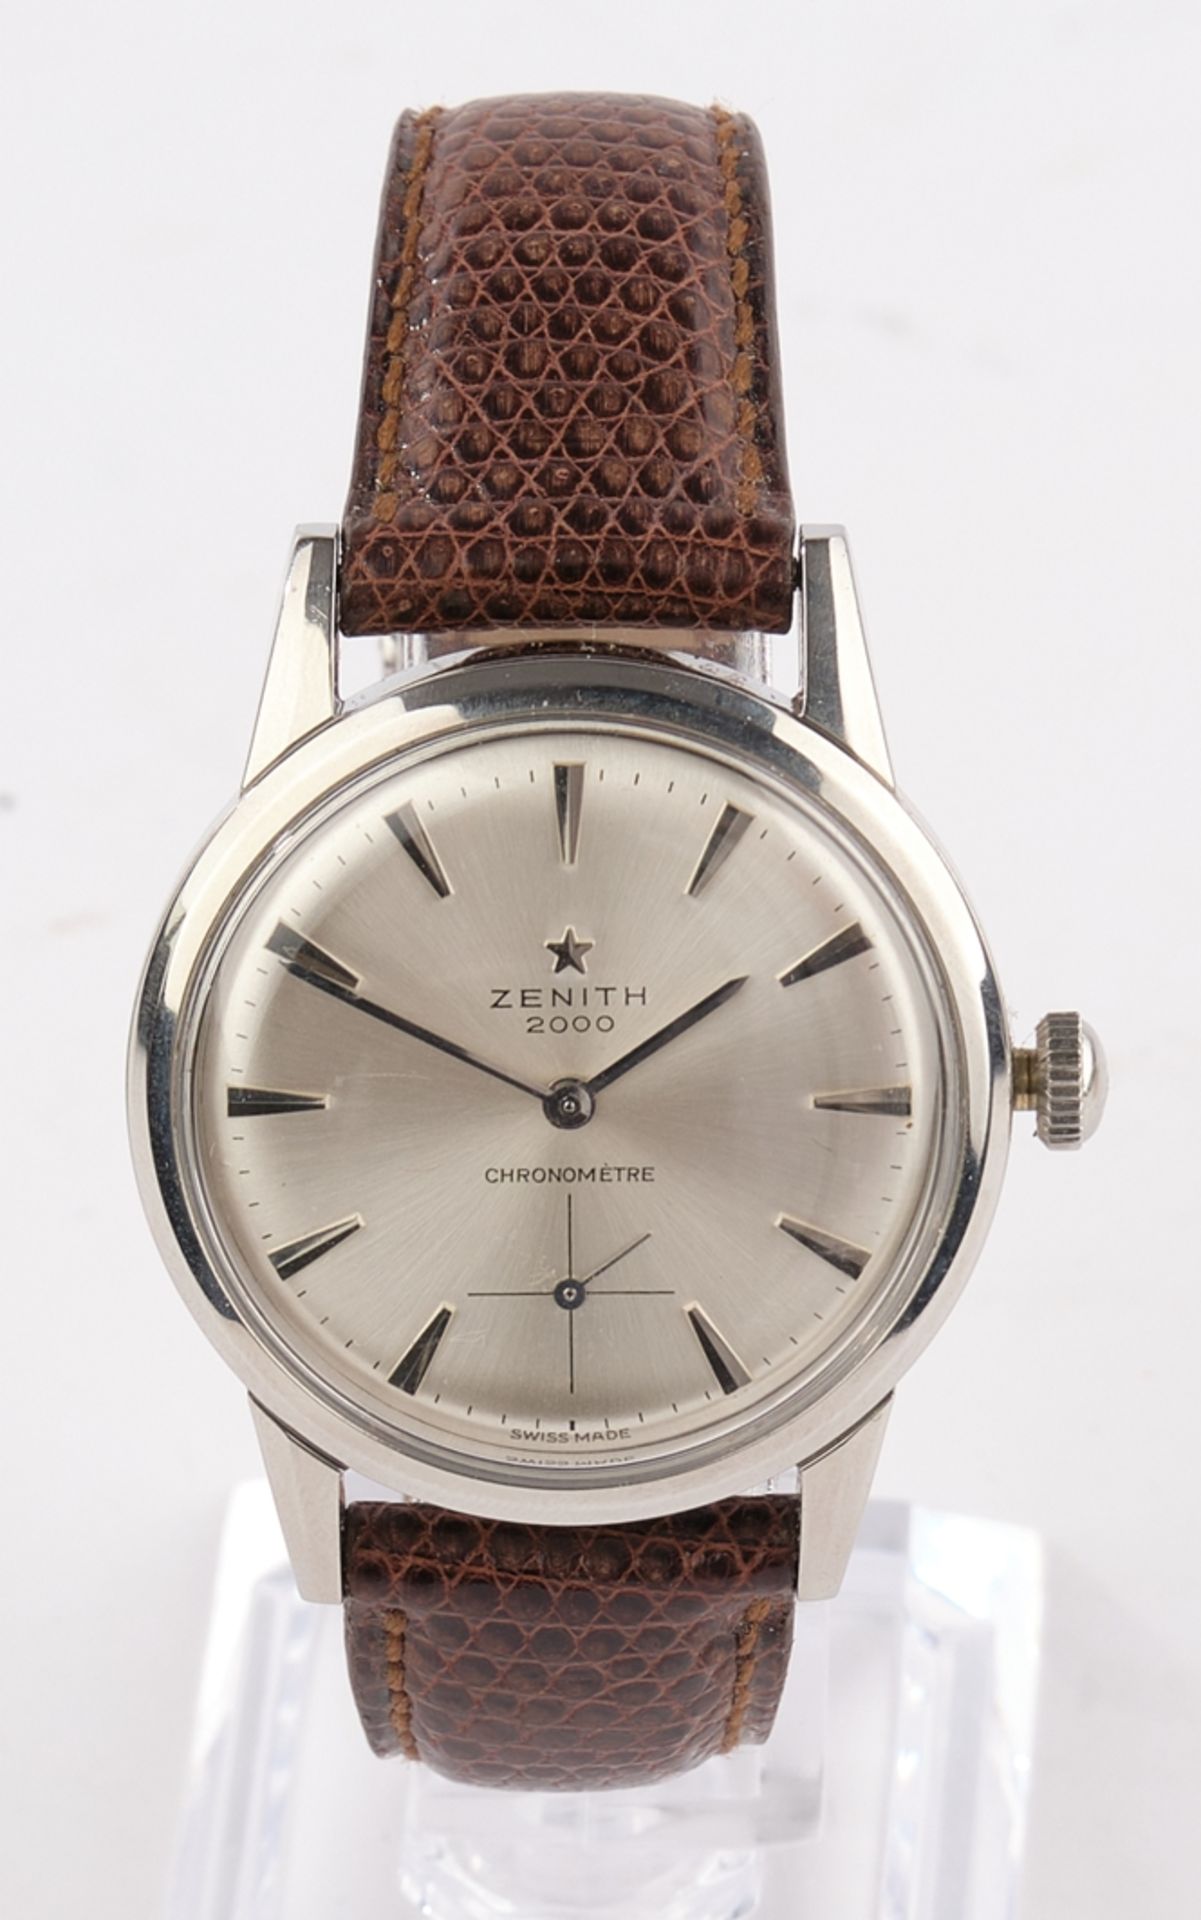 Armbanduhr Zenith 2000 Chronometer, Schweiz, 1960er Jahre, wohl Cal. 135, Handaufzug, neuwertiges b